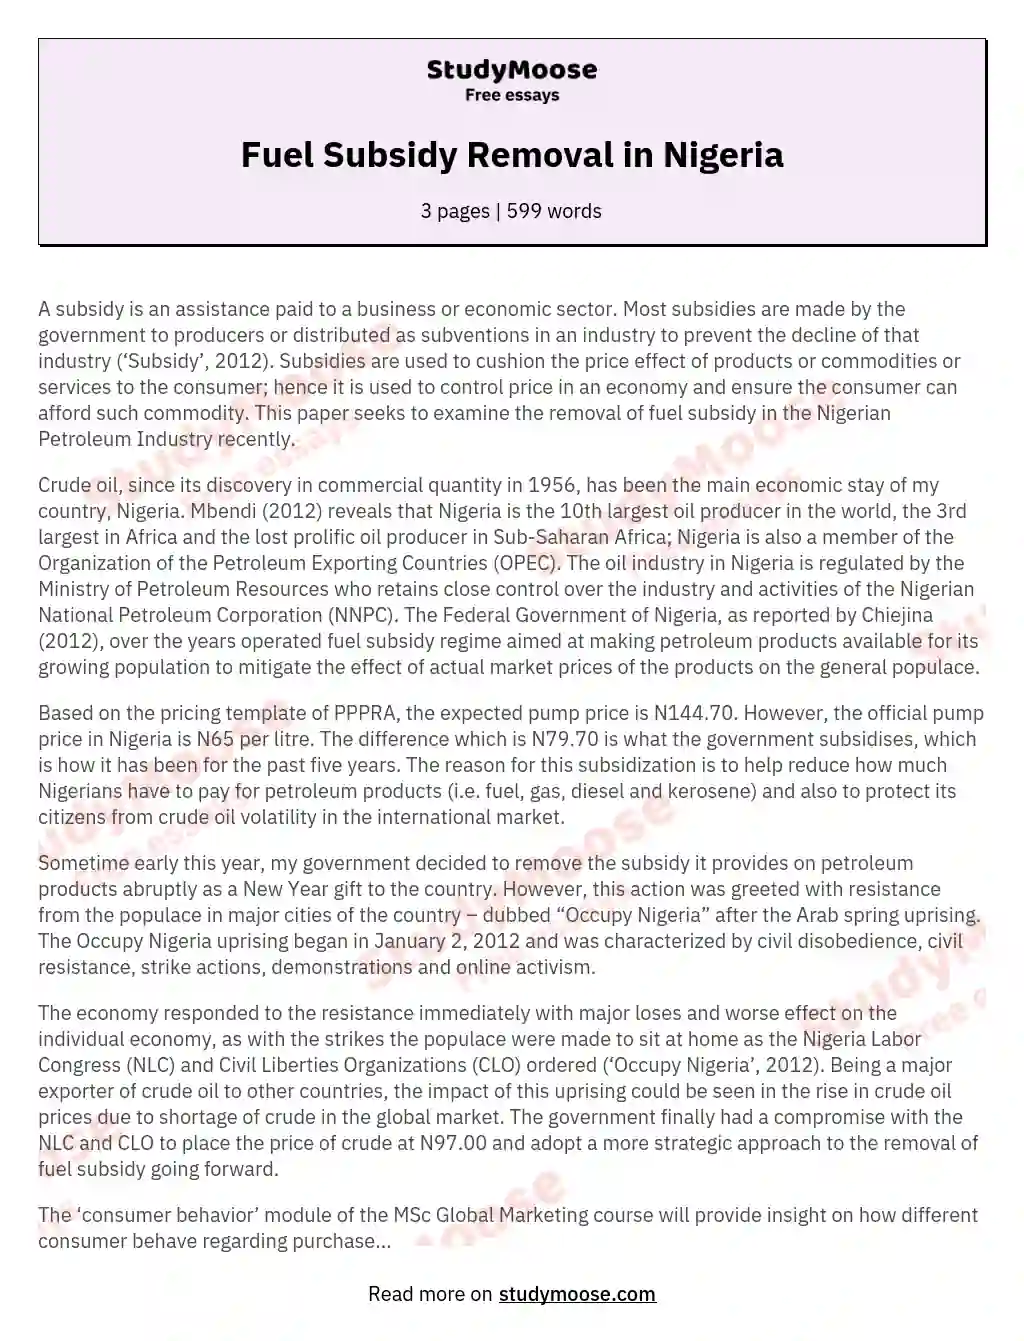 Fuel Subsidy Removal in Nigeria essay